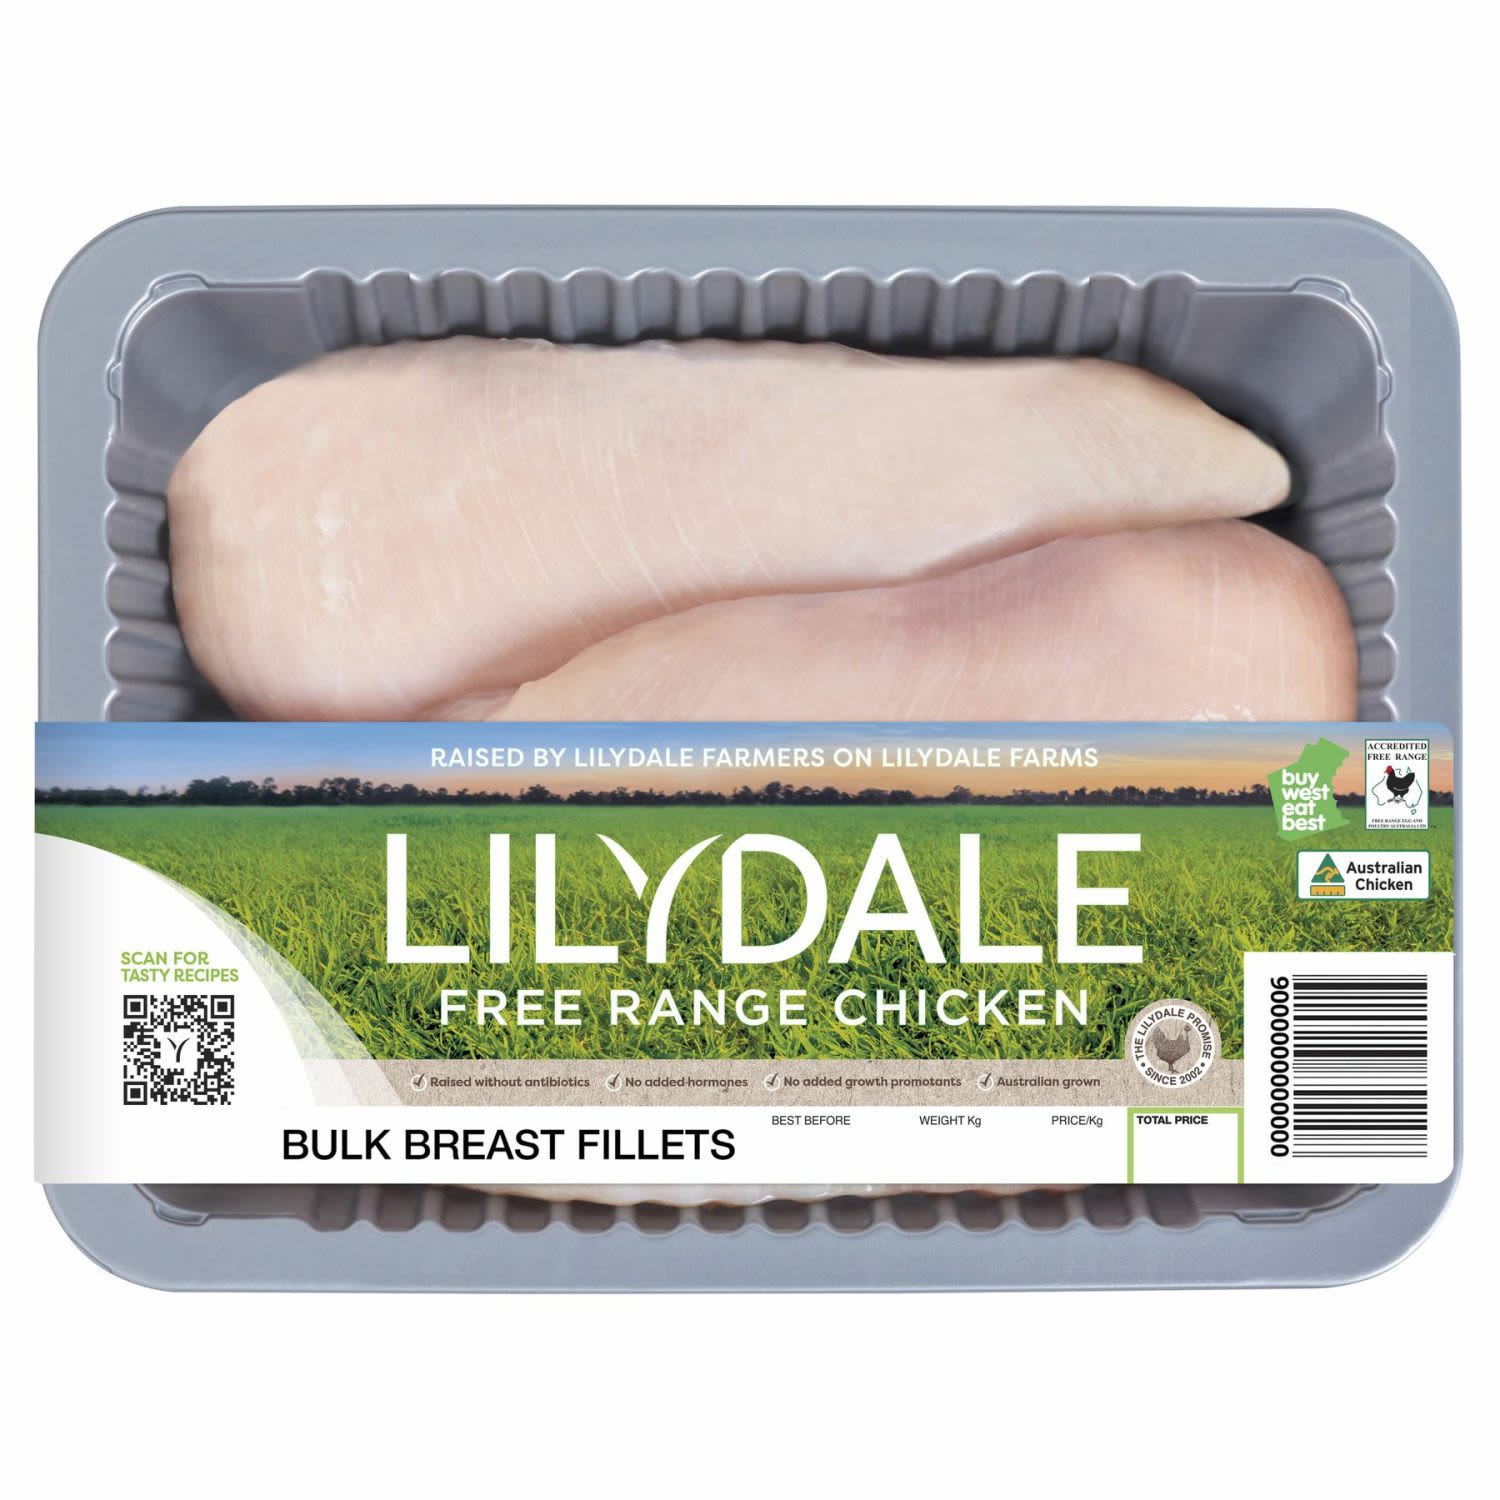 Lilydale Free Range Chicken Bulk Breast Fillets, 1 Kilogram